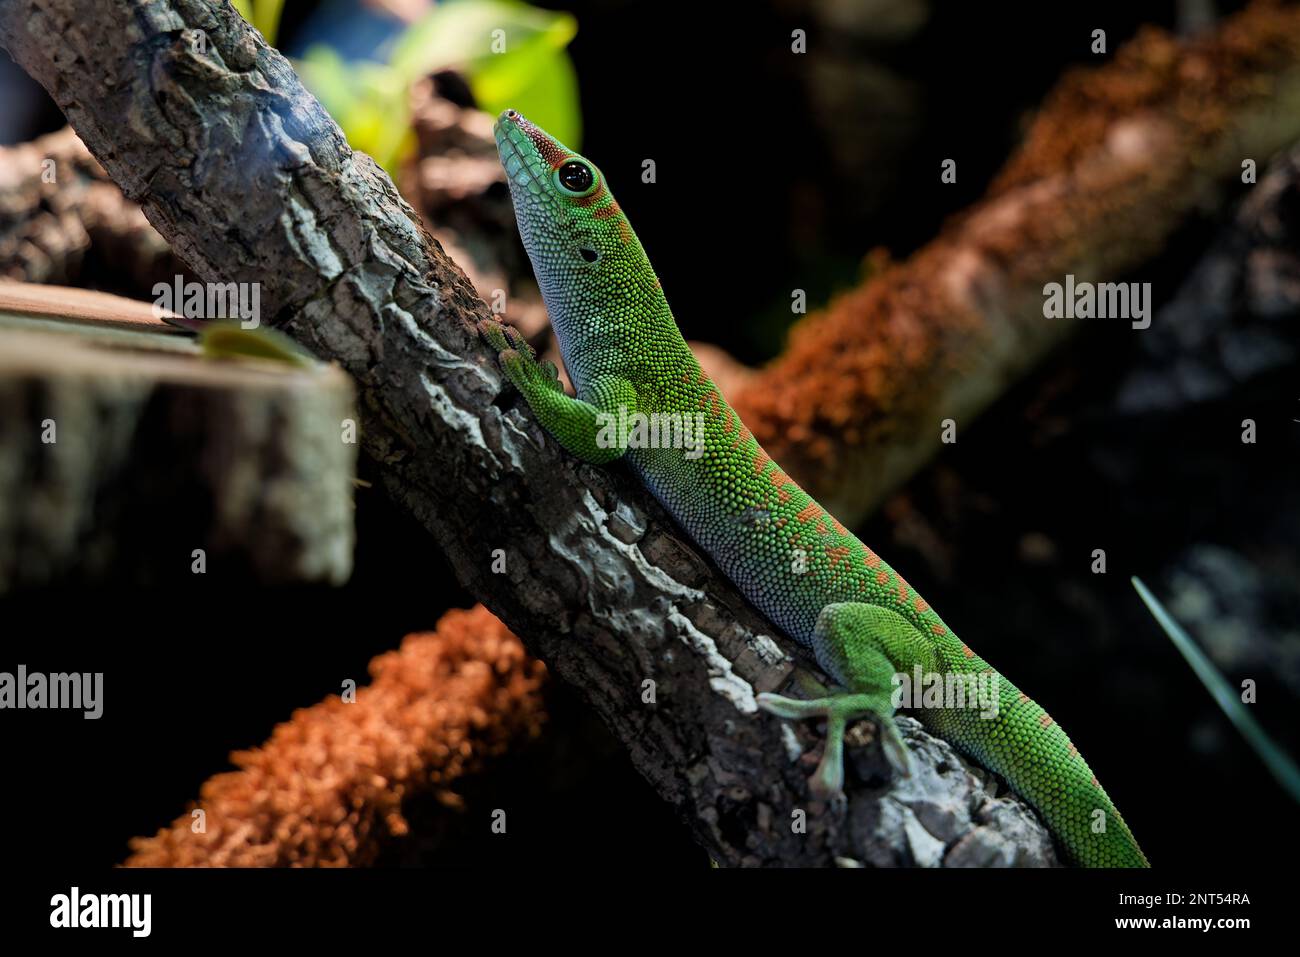 Madagascar large day gecko, Phelsuma grandis on a branch Stock Photo